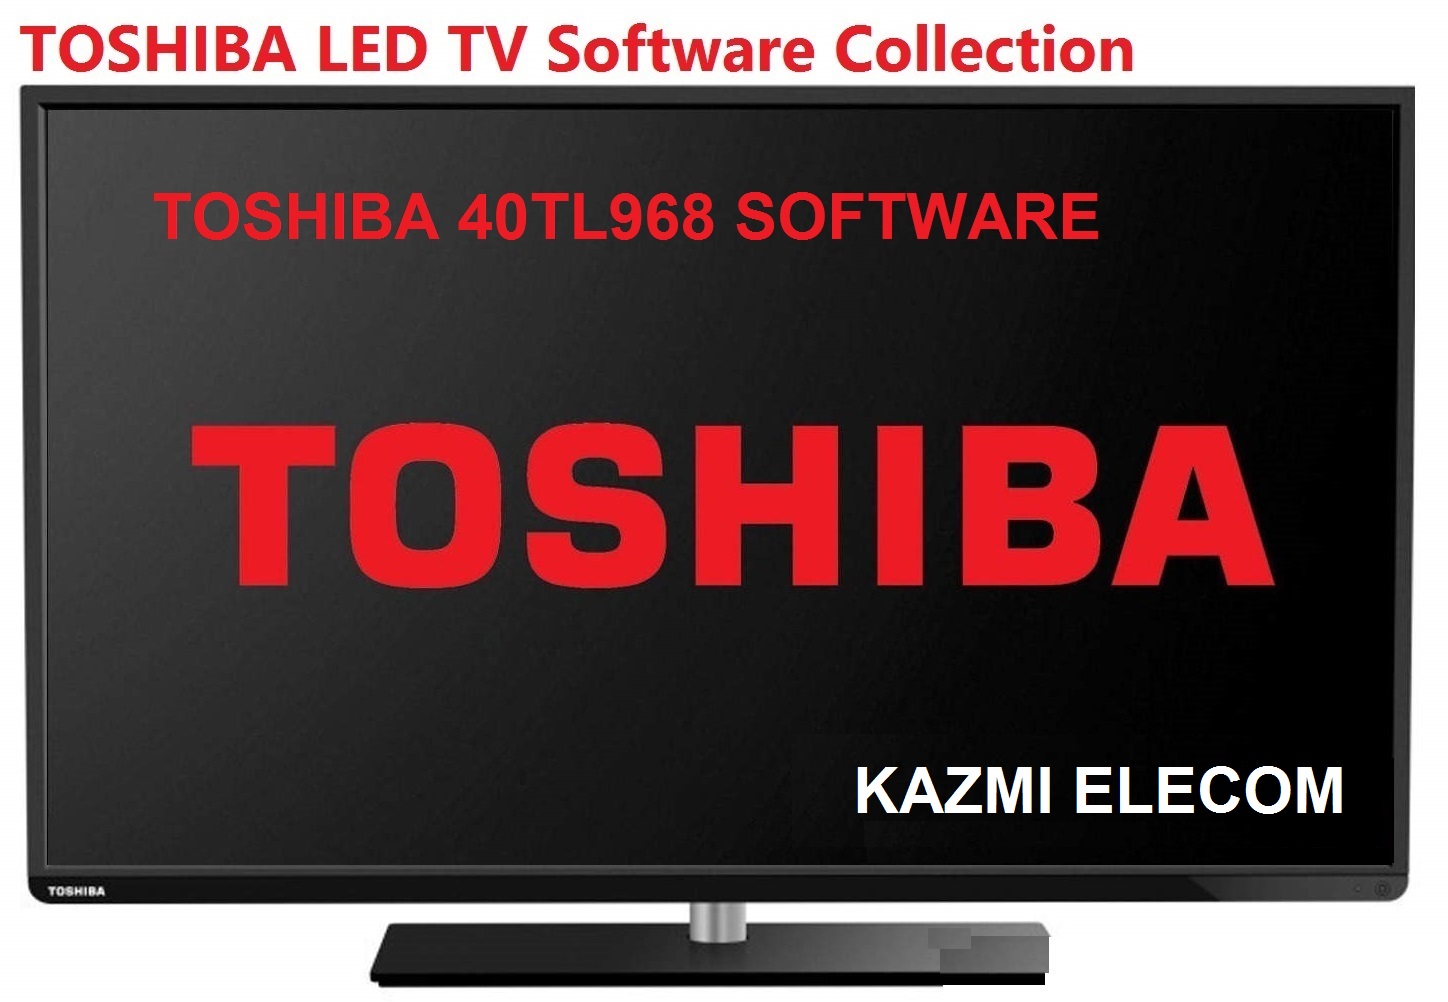 Toshiba 40Tl968